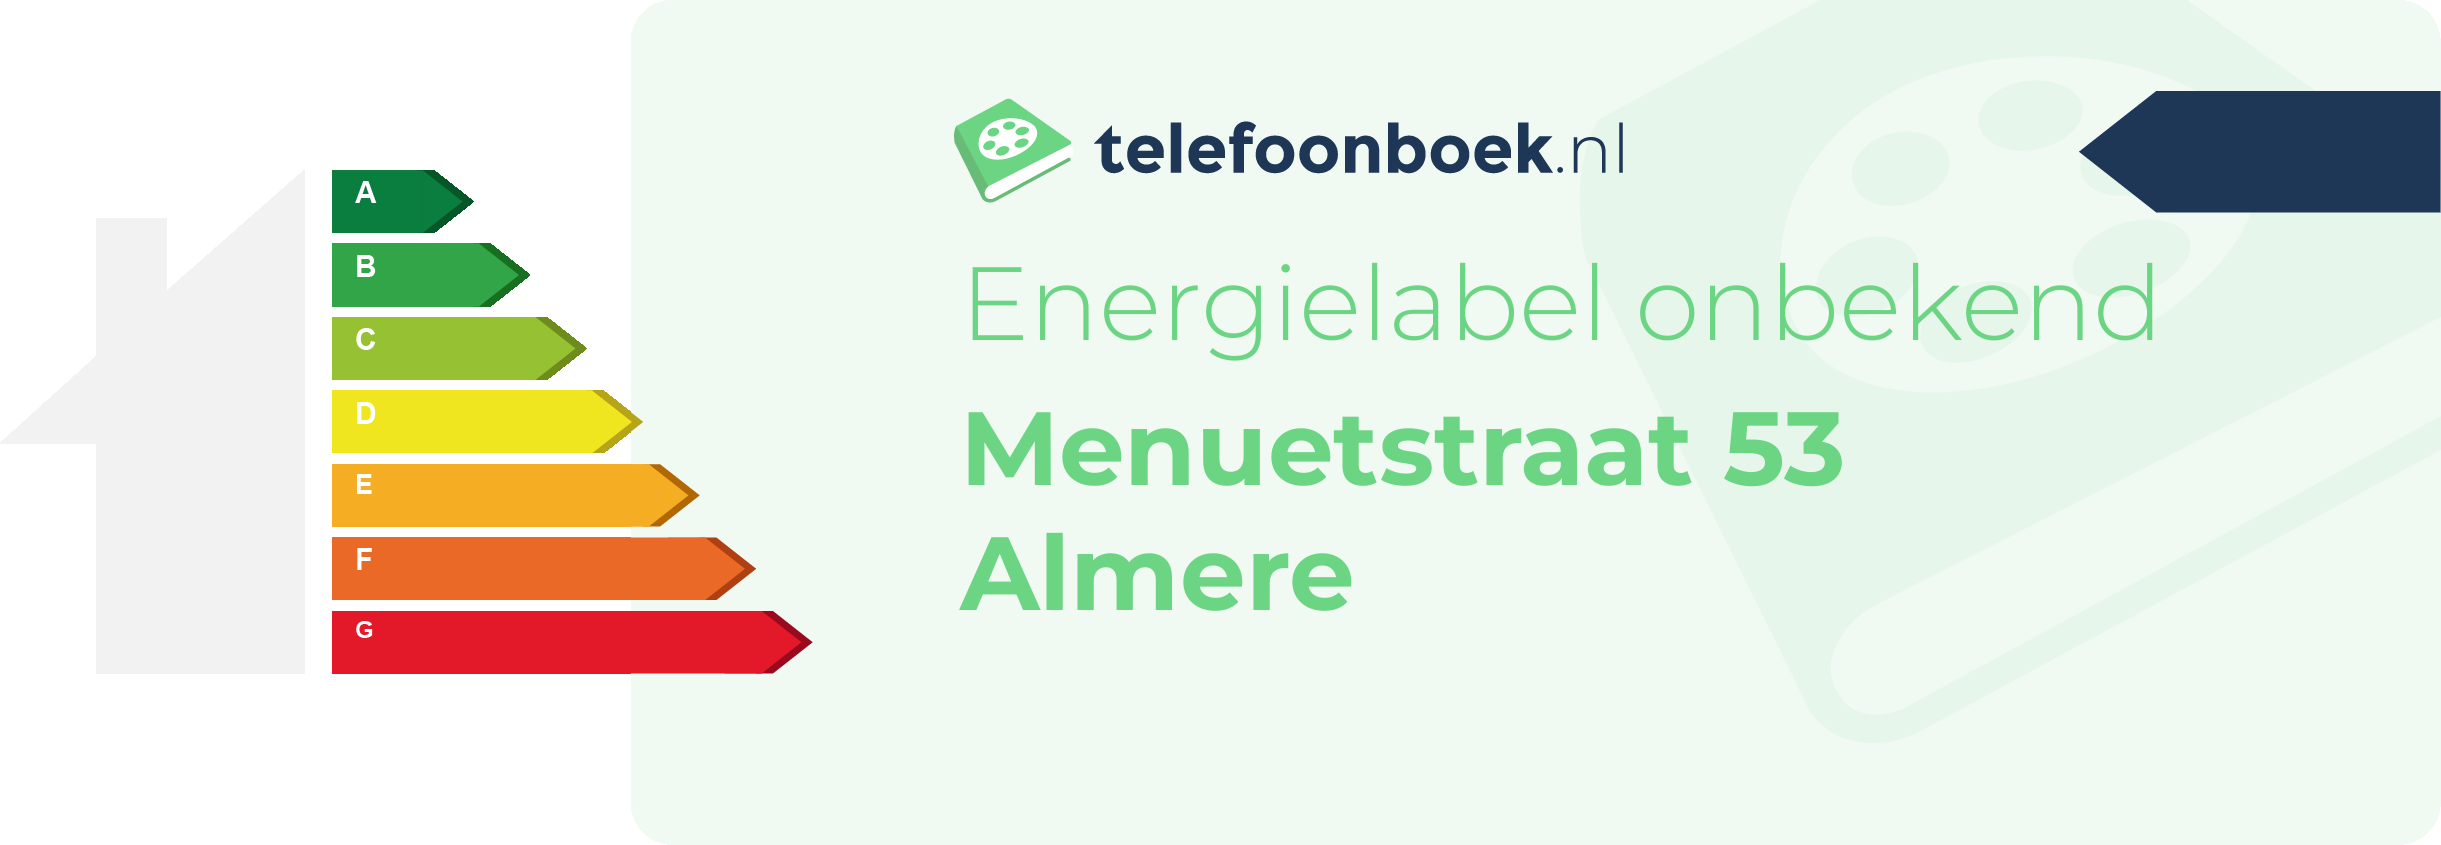 Energielabel Menuetstraat 53 Almere